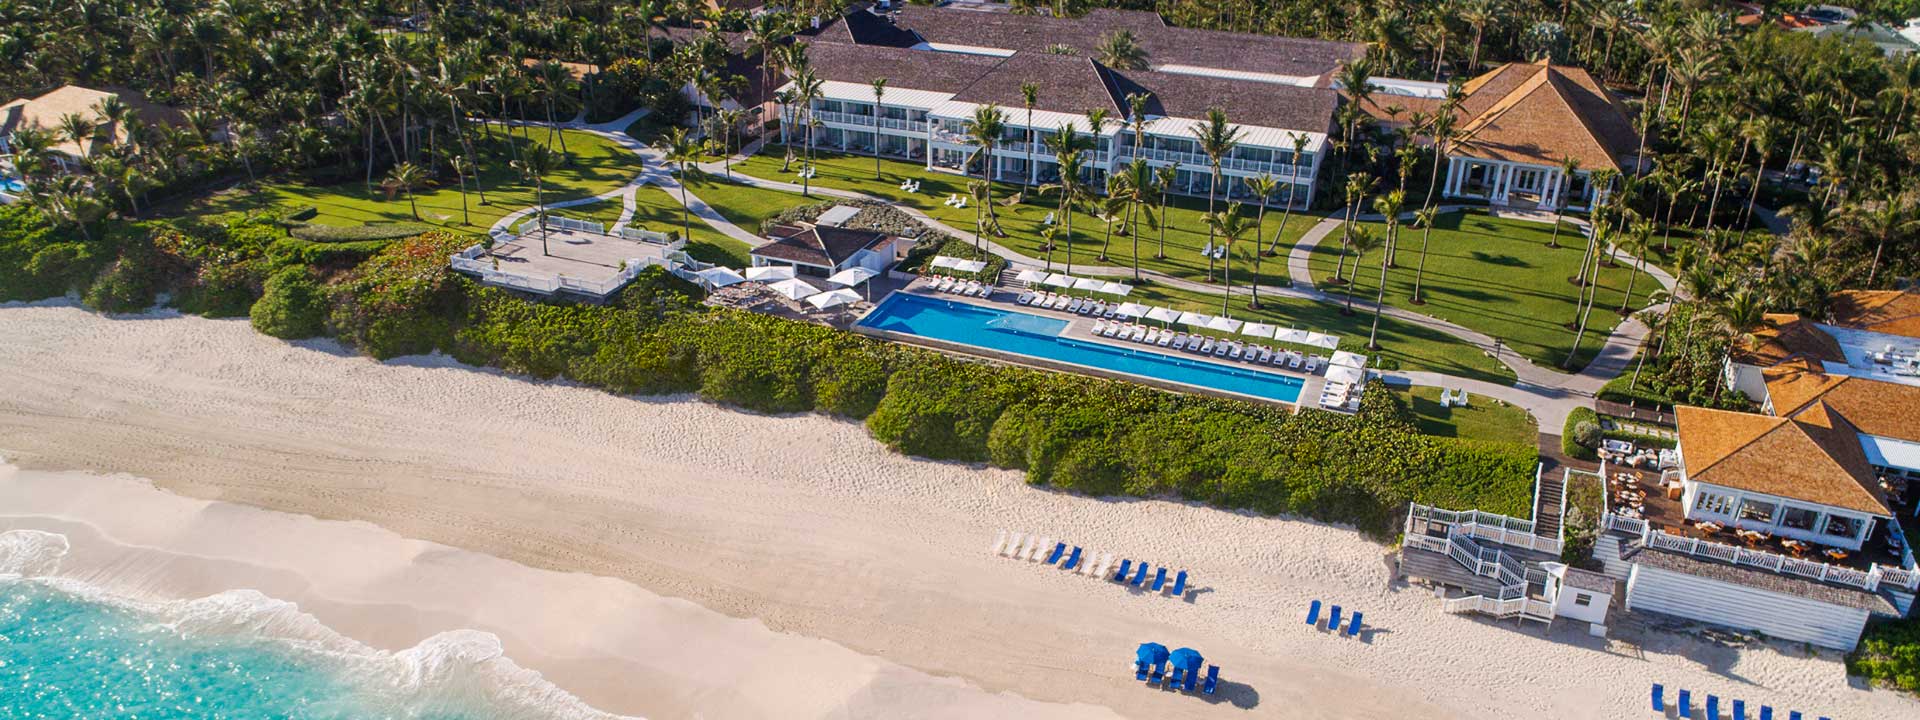 Four Seasons Resort, The Ocean Club, GOLF's Top 100 Resorts